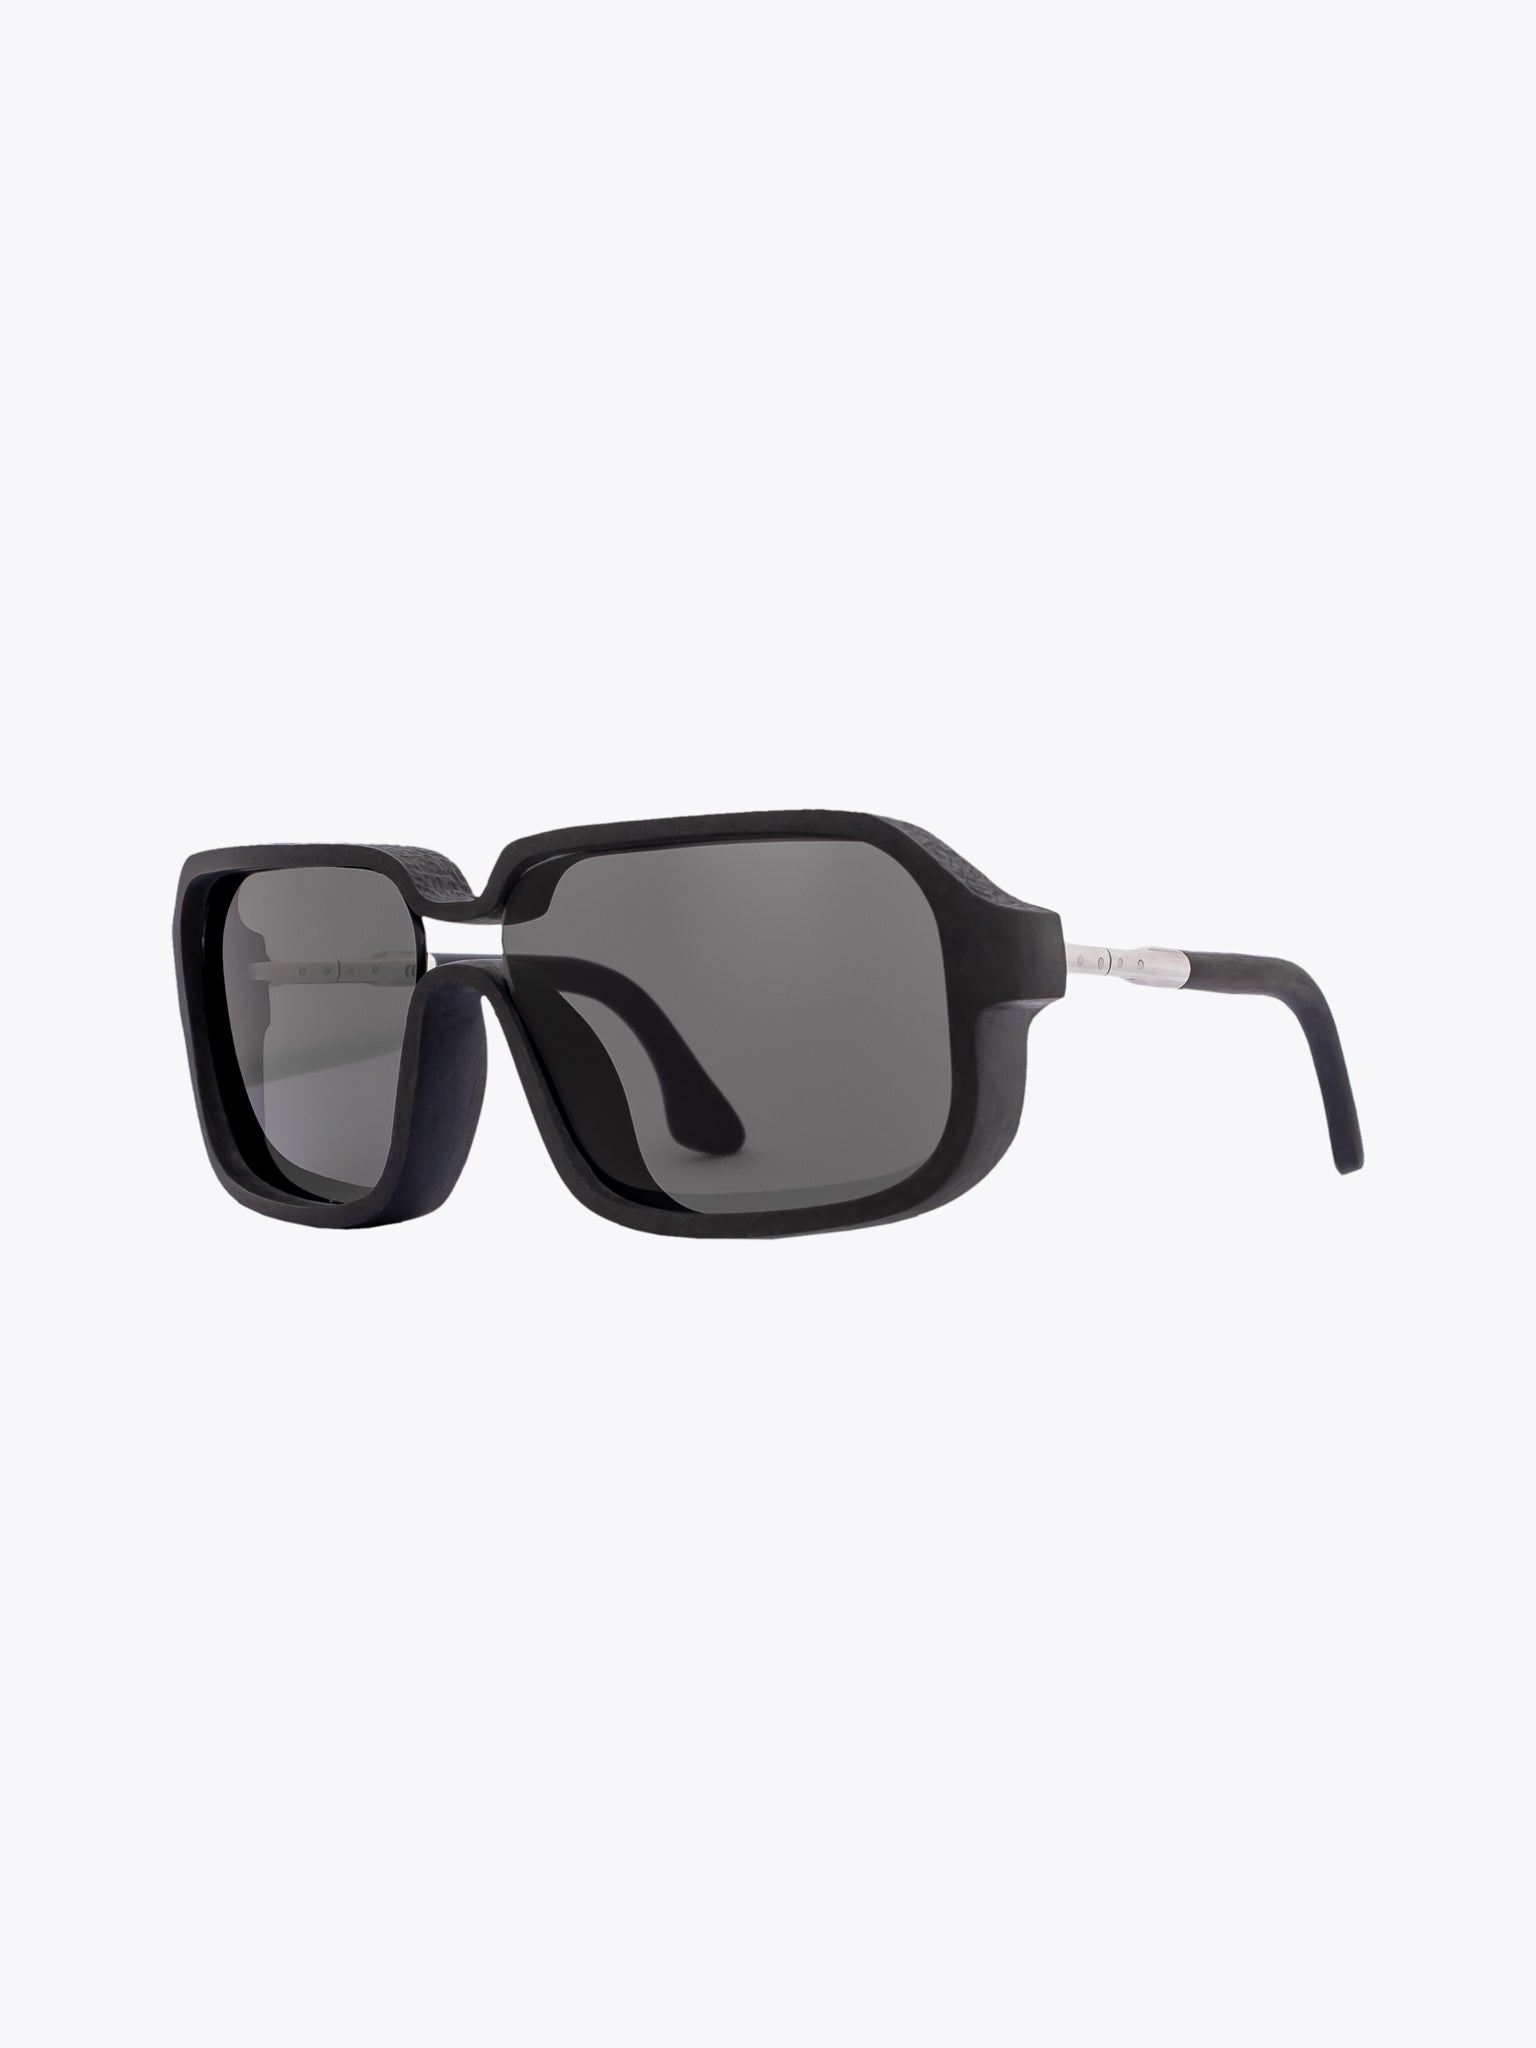 IMPURI Super Recycled Carbon Sunglasses Black